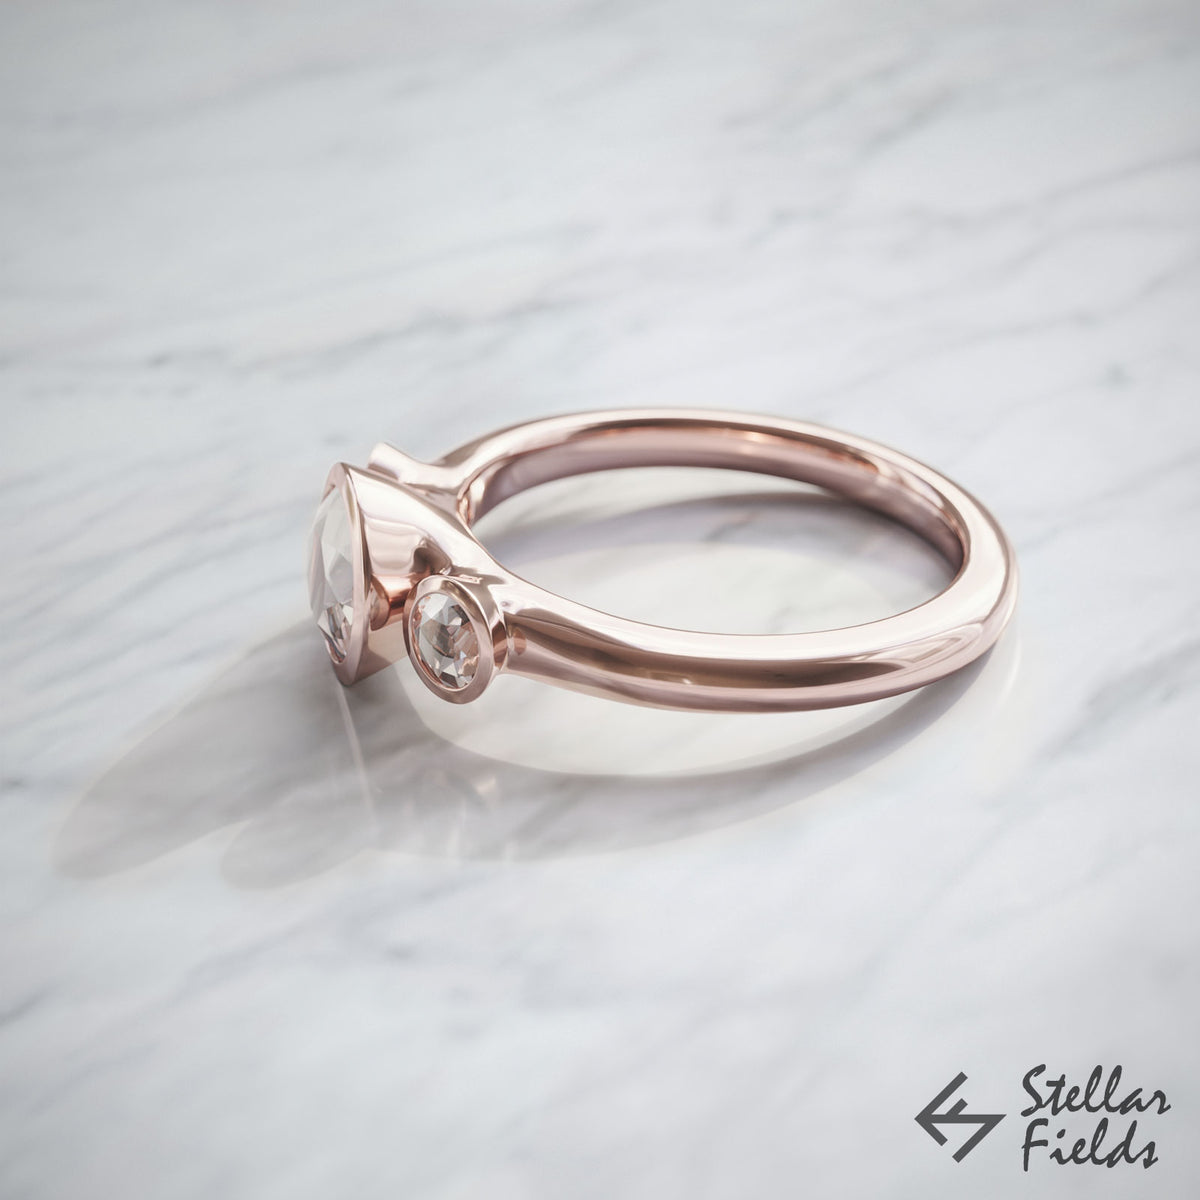 Three Stone Bezel Ring Alternative Ethical Diamonds Bezel Ring 14k Rose Gold Stellar Fields Jewelry